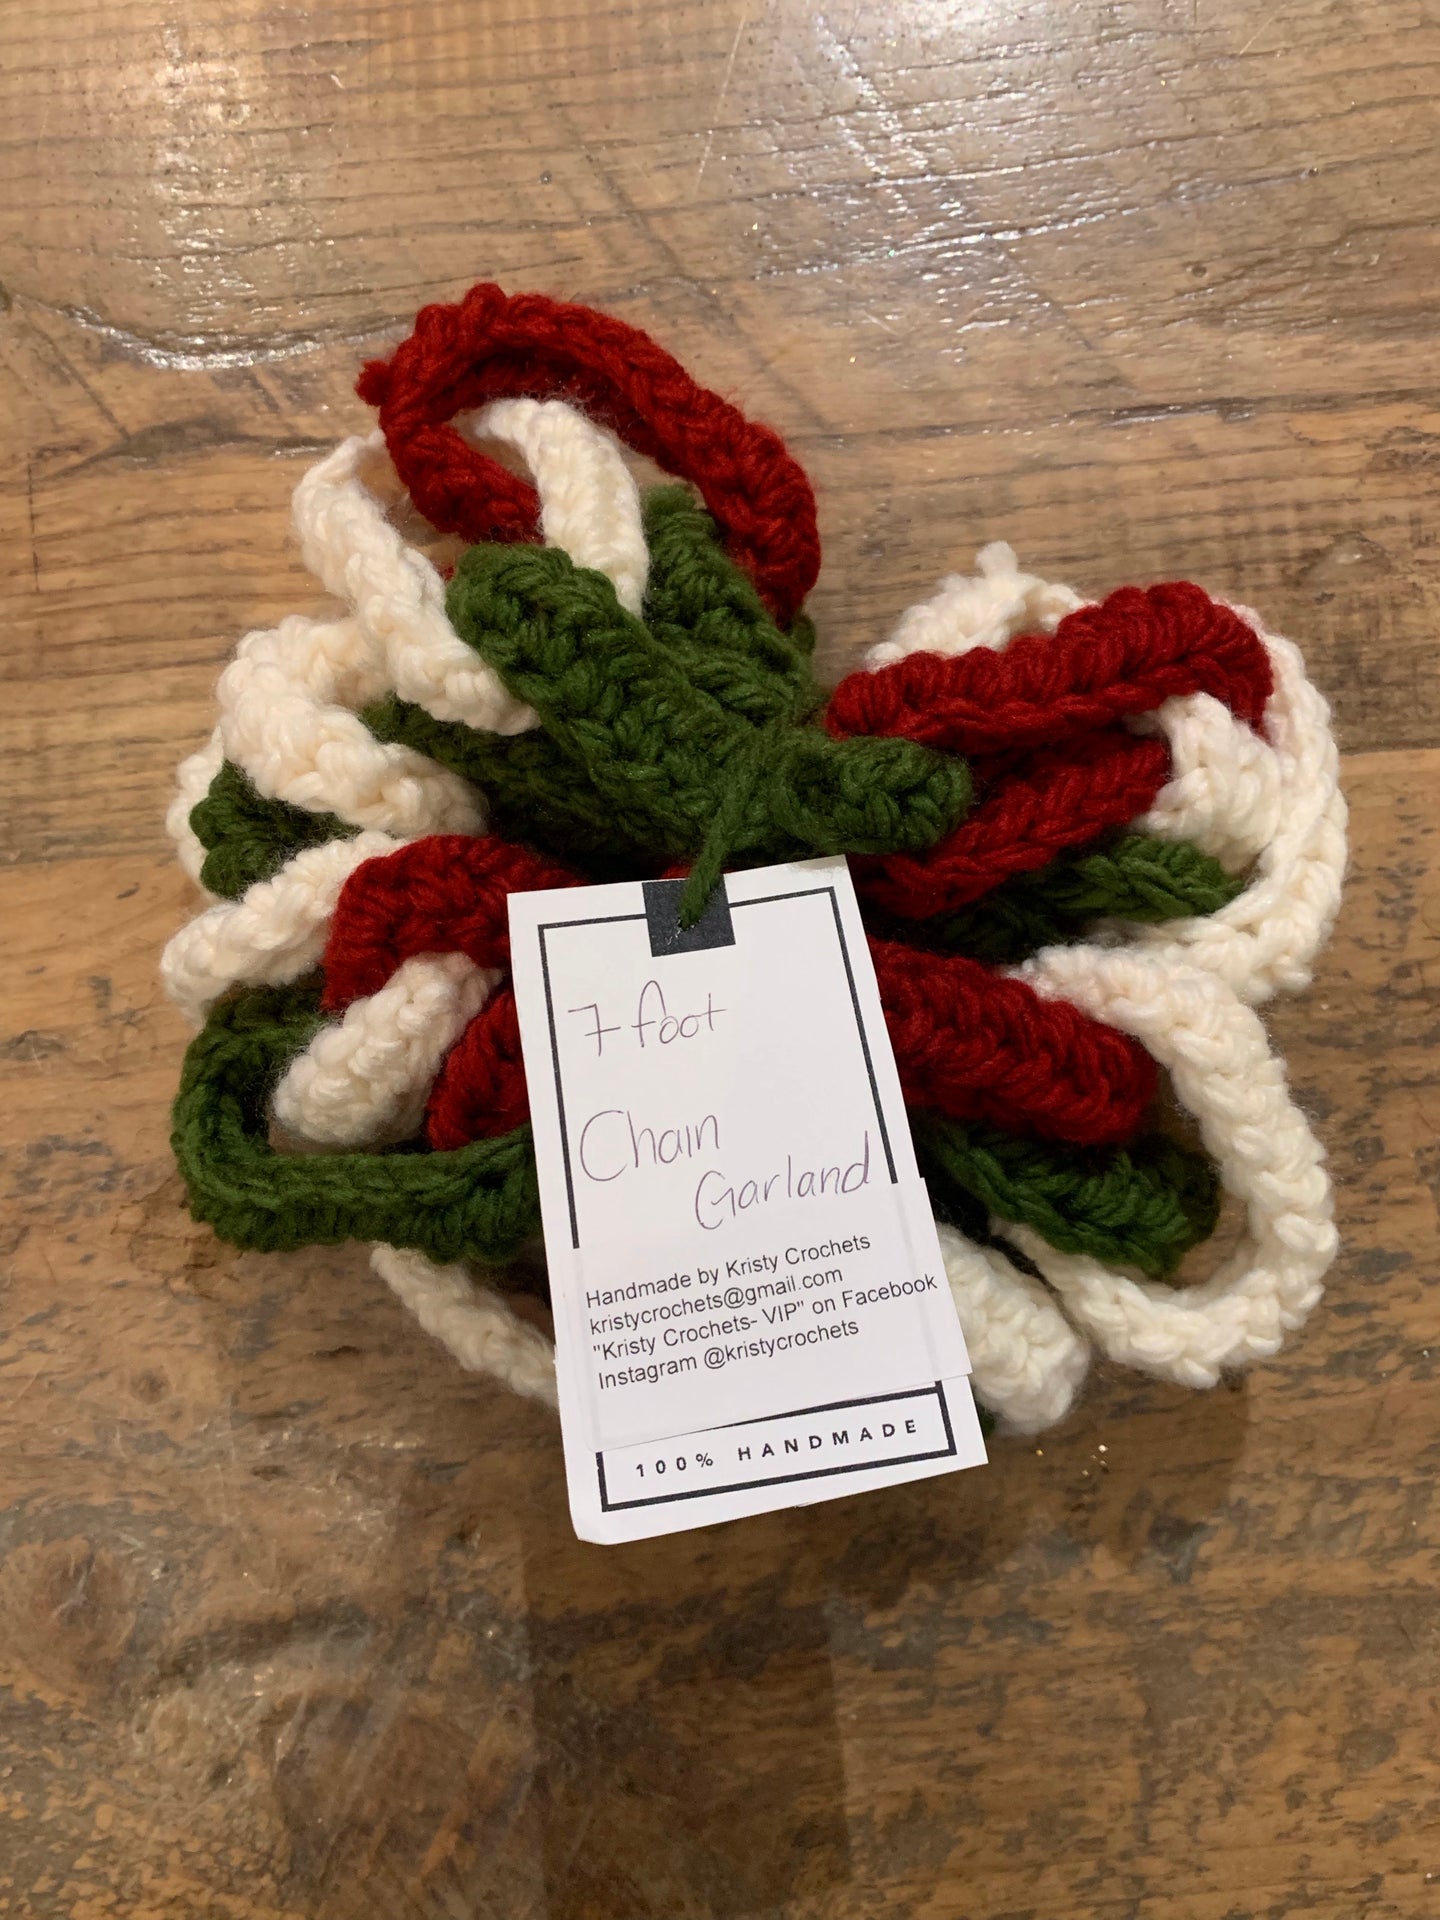 Locally Made Crochet Garland